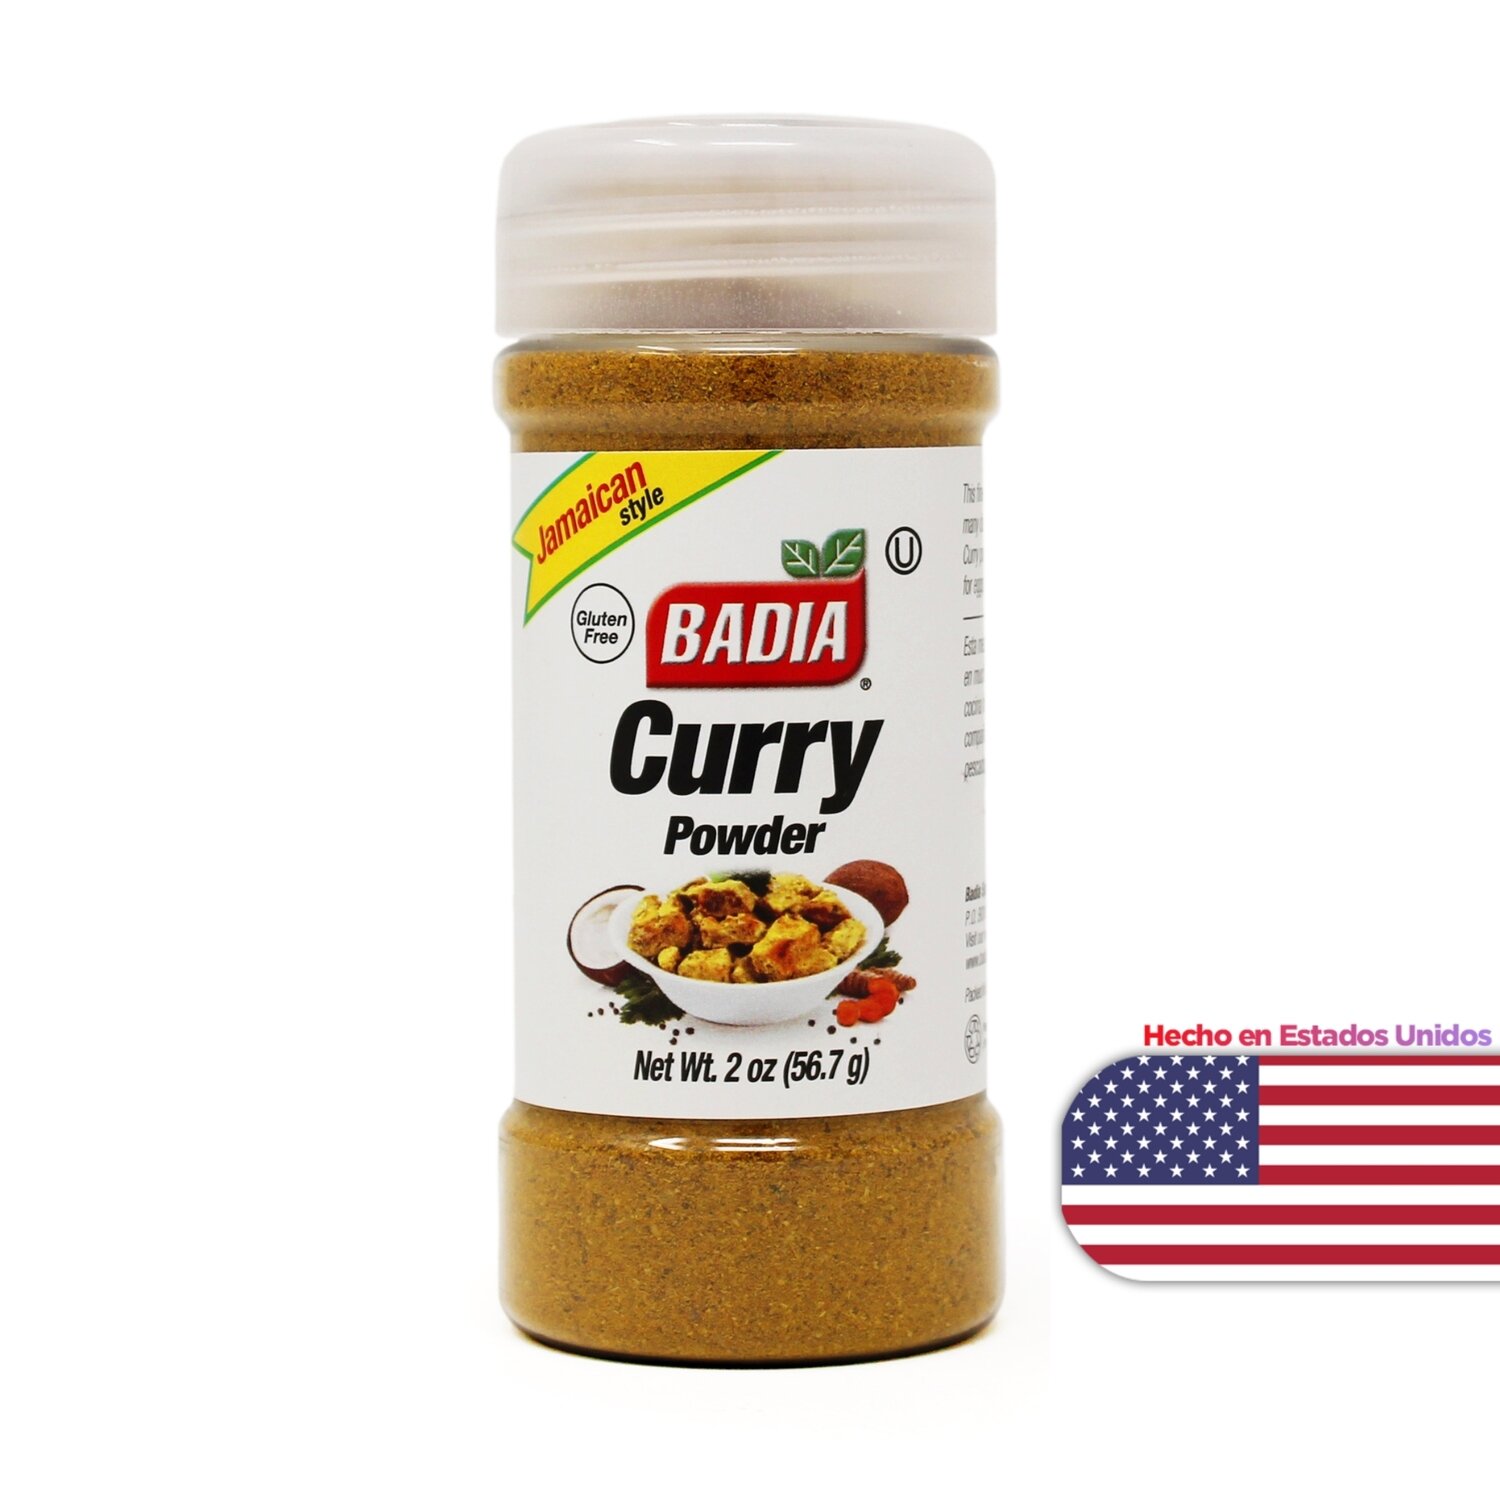 Badia Curry en polvo x56,7grs